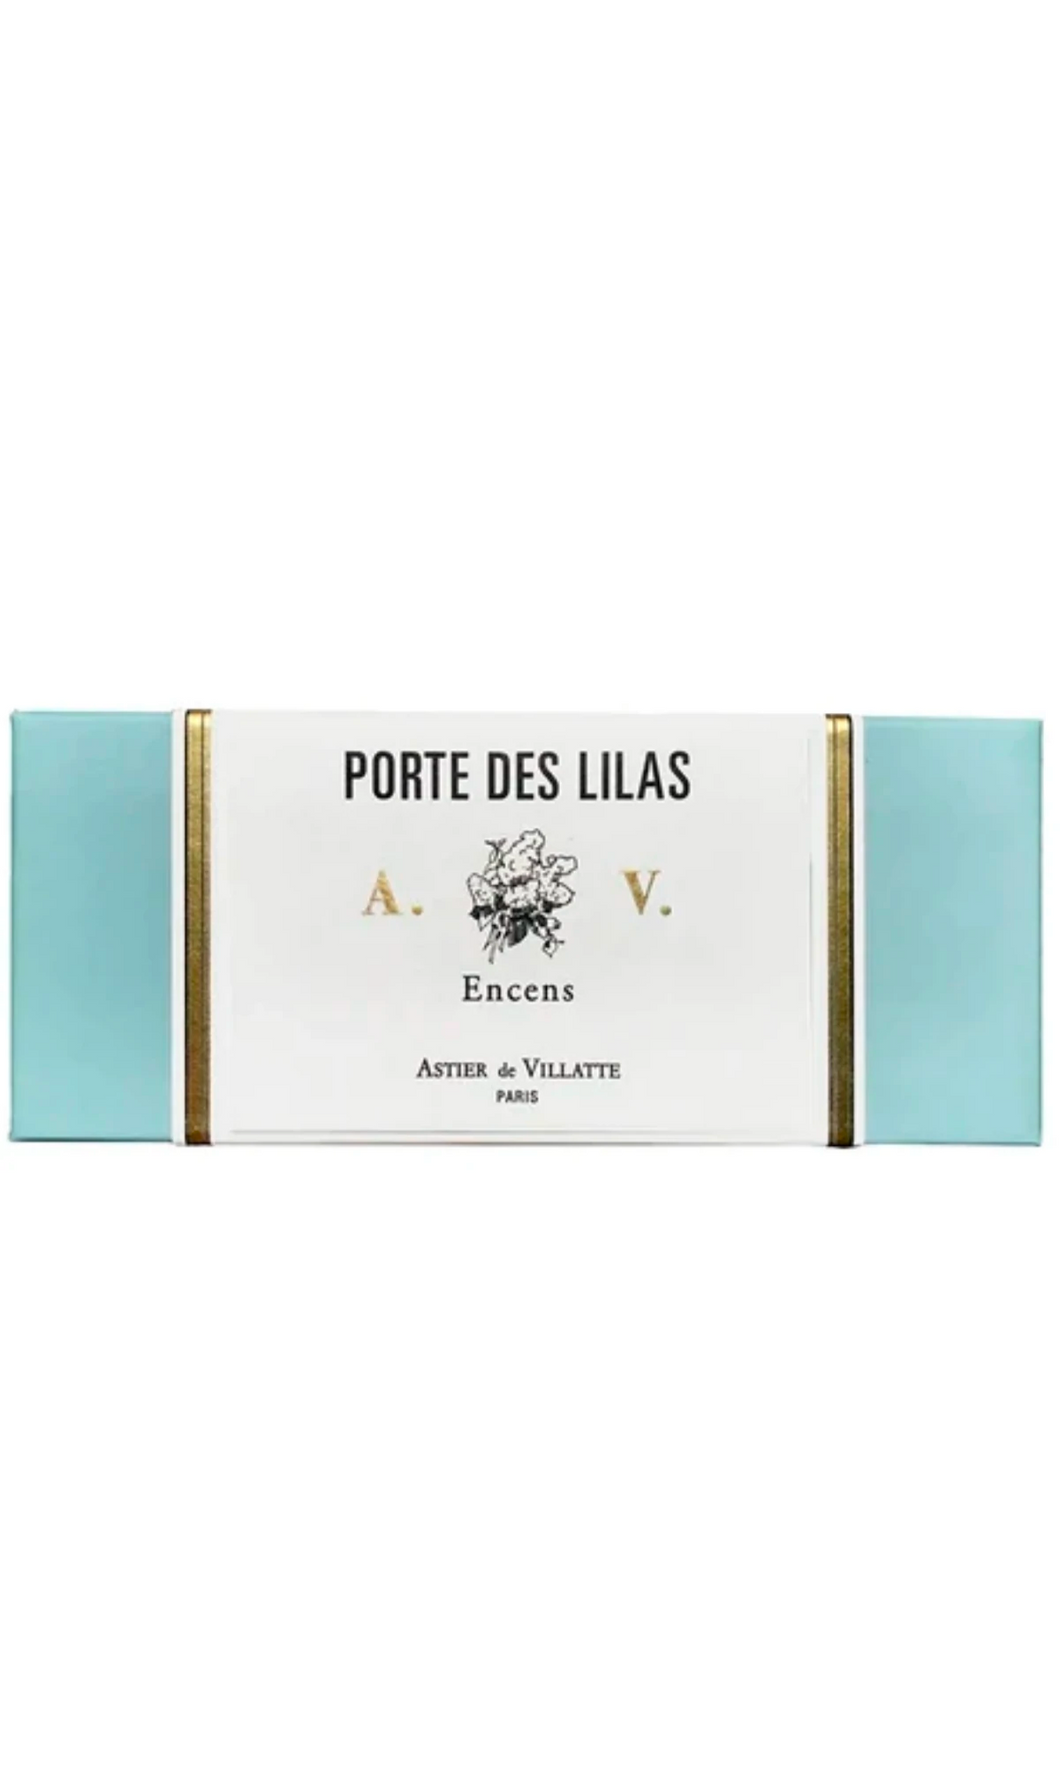 Astier de Villatte Porte des Lilas Incense in blue and gold box, available at Amara Home.